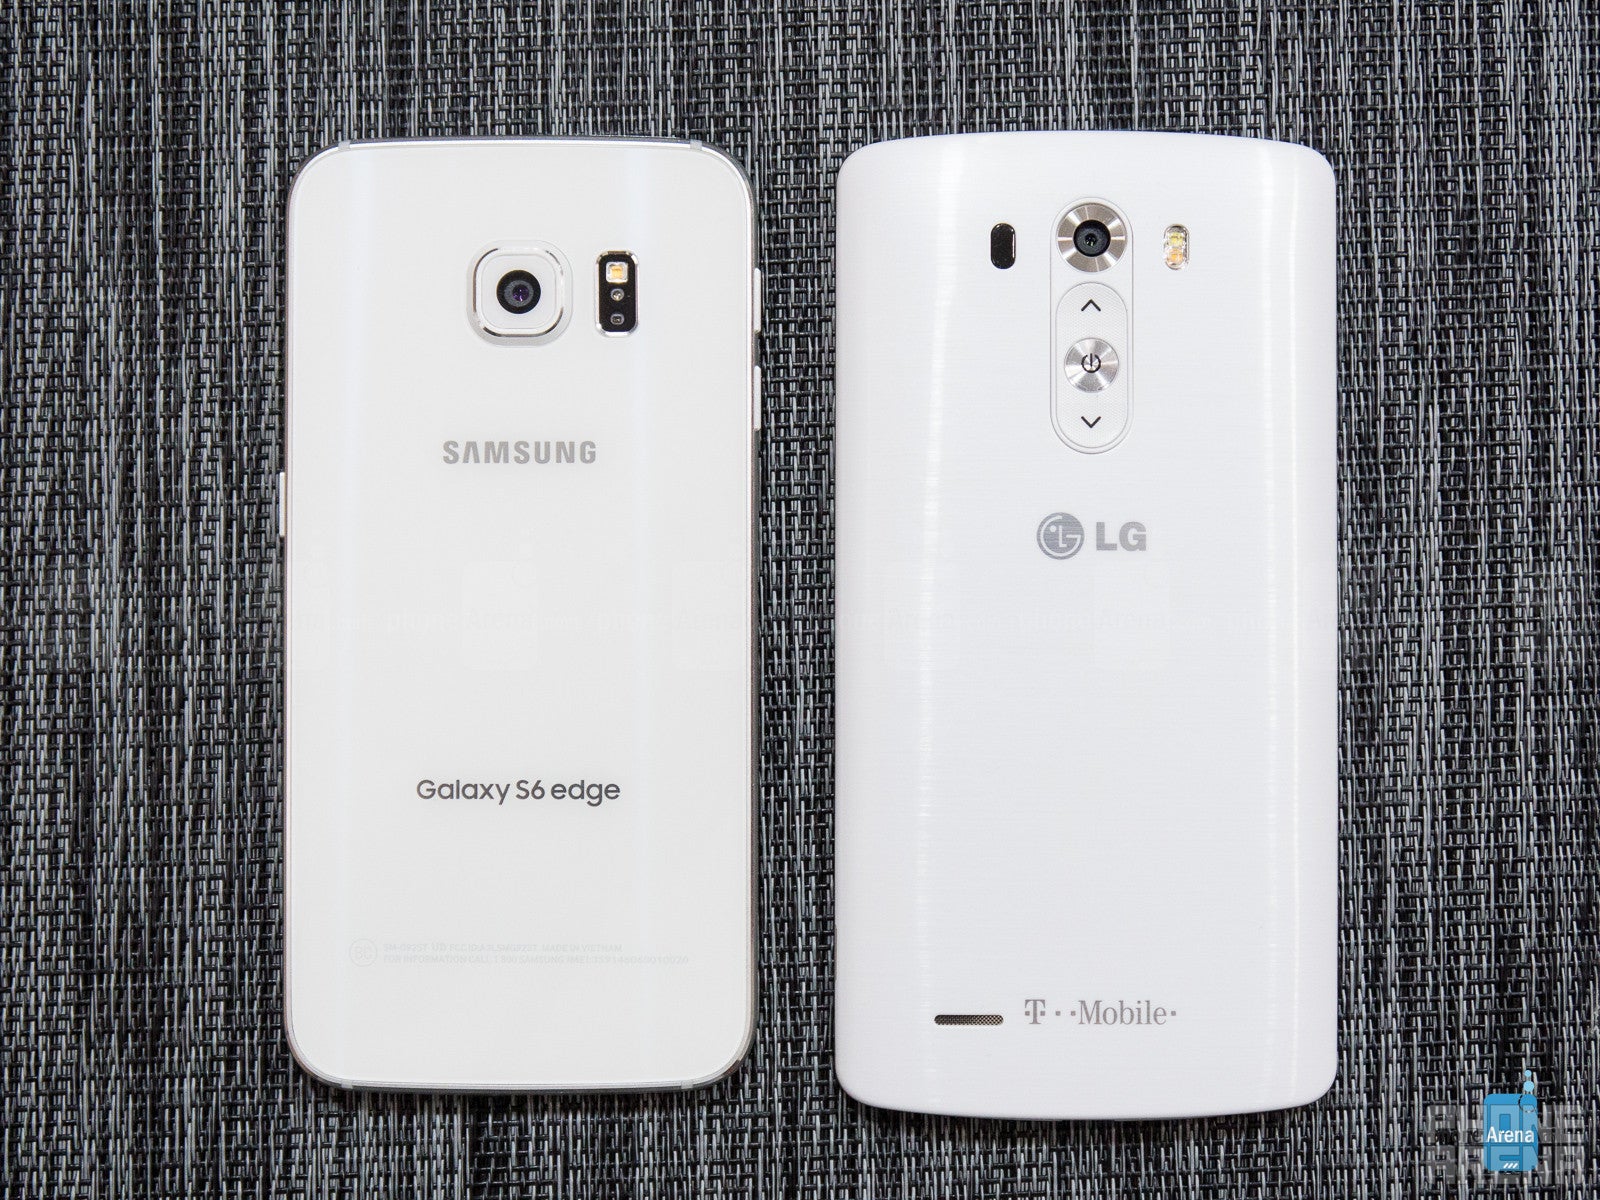 Samsung Galaxy S6 edge vs LG G3